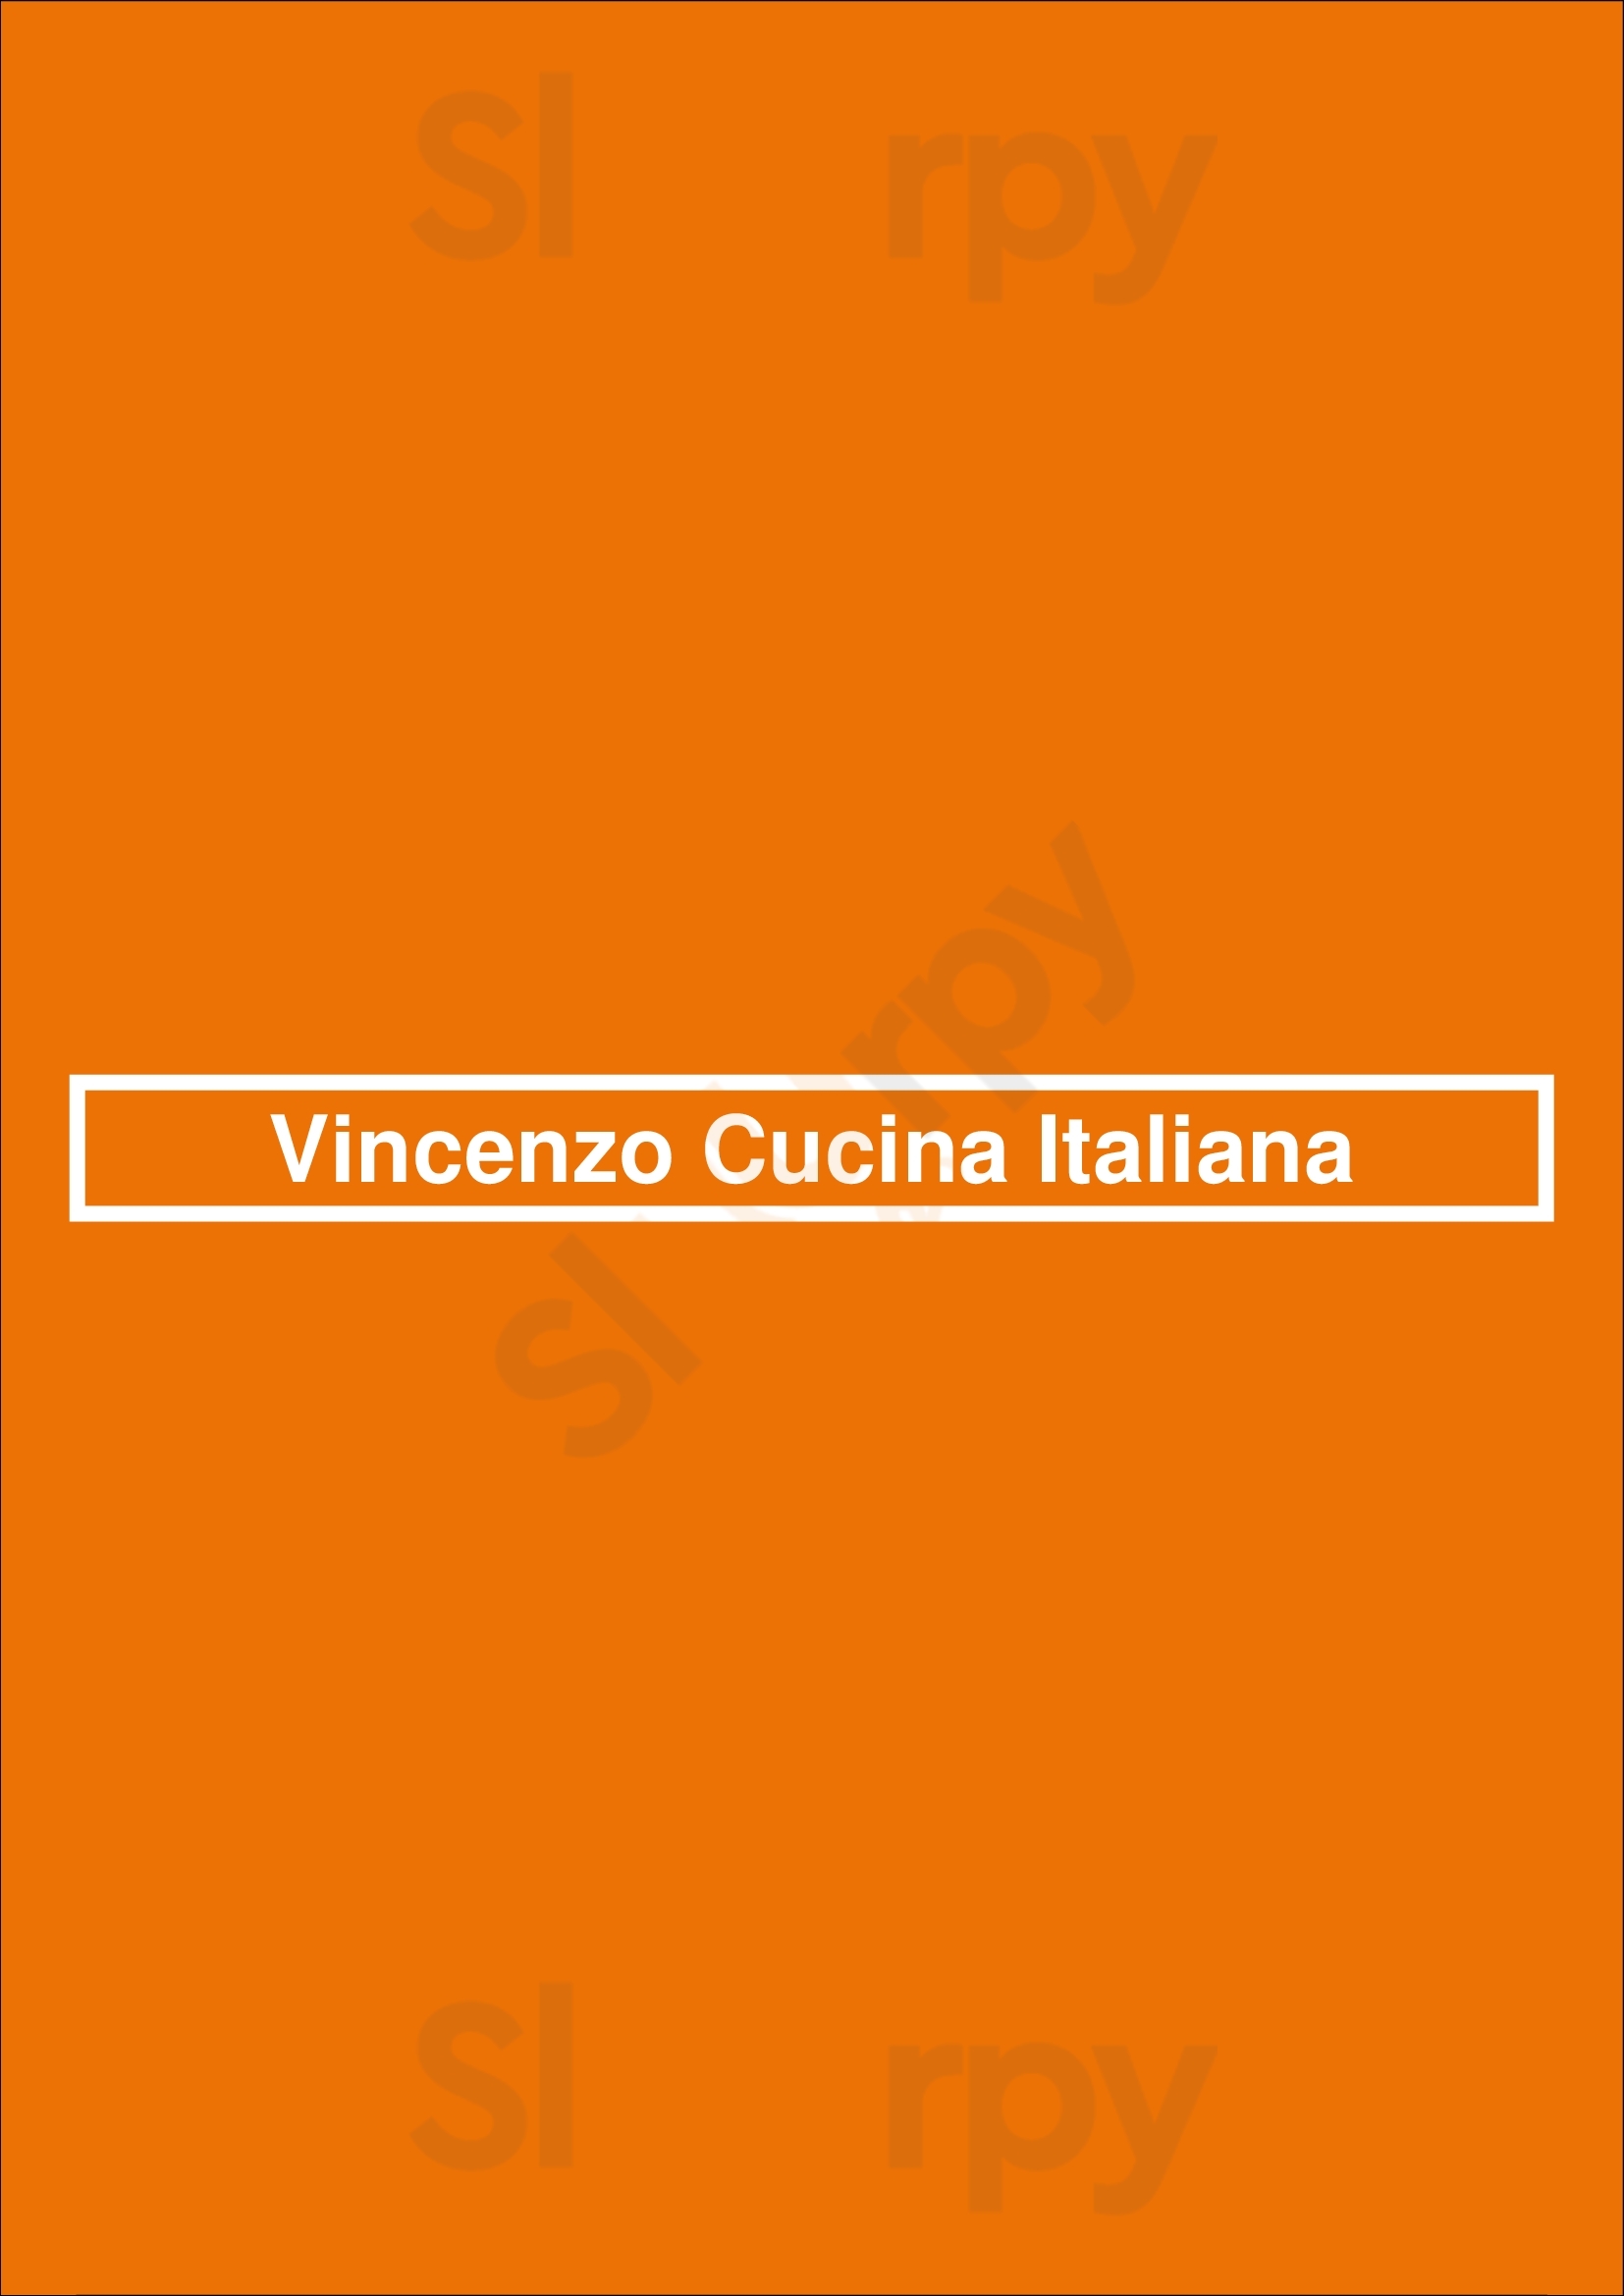 Vincenzo Cucina Italiana Orlando Menu - 1